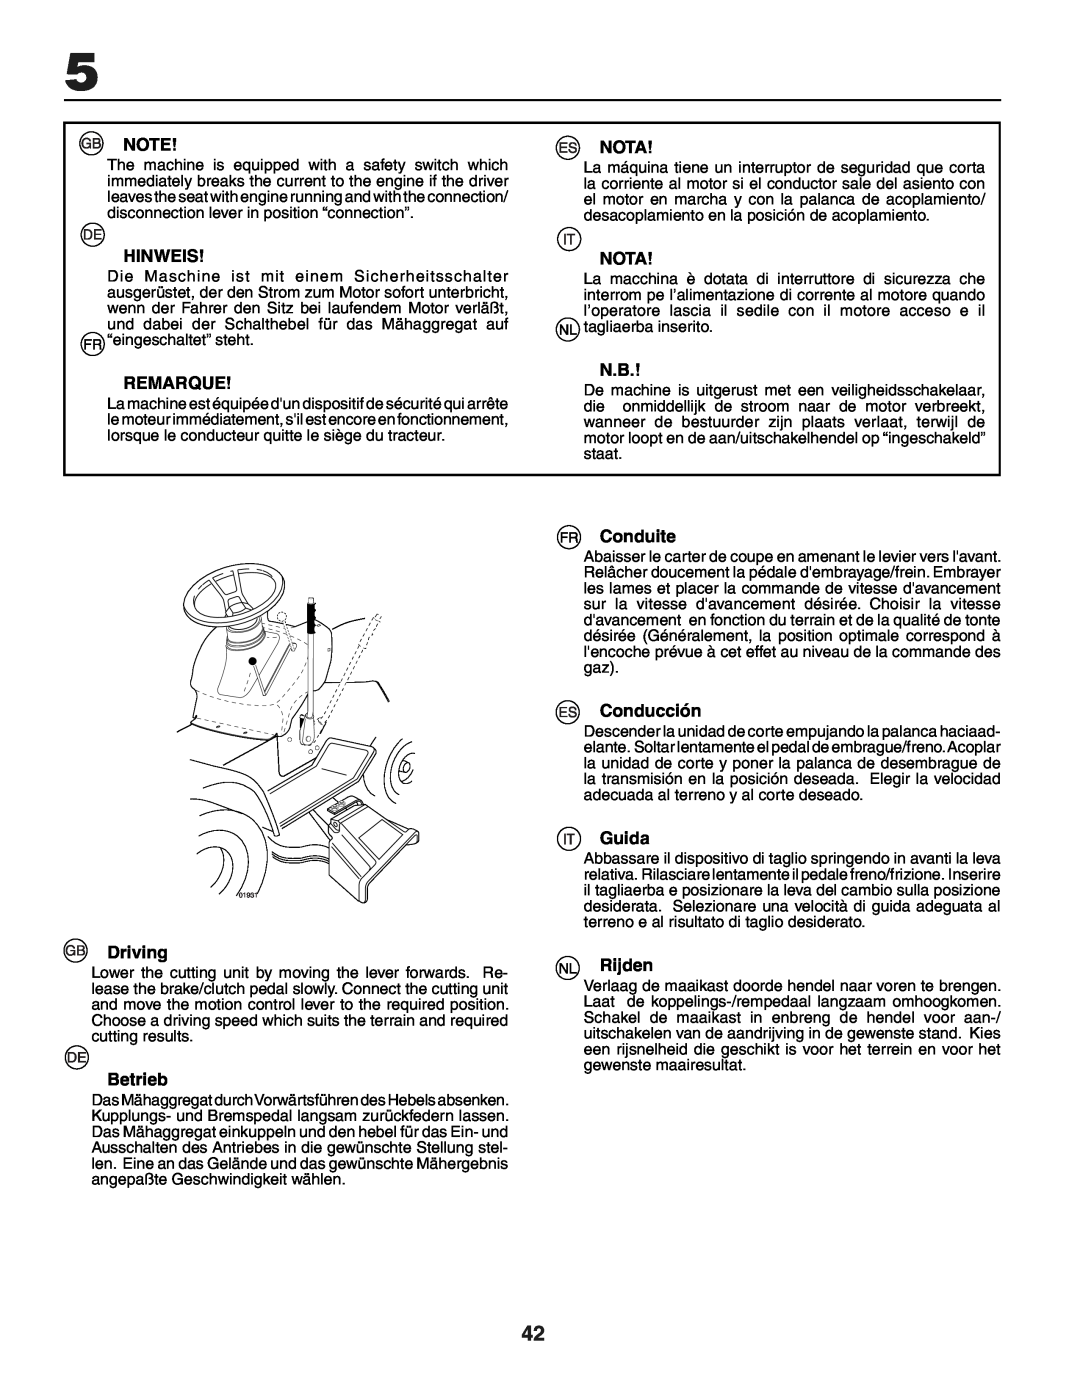 Husqvarna YTH150XP instruction manual Nota, Hinweis, Remarque, Conduite, Conducción, Guida, Driving, Betrieb, Rijden 